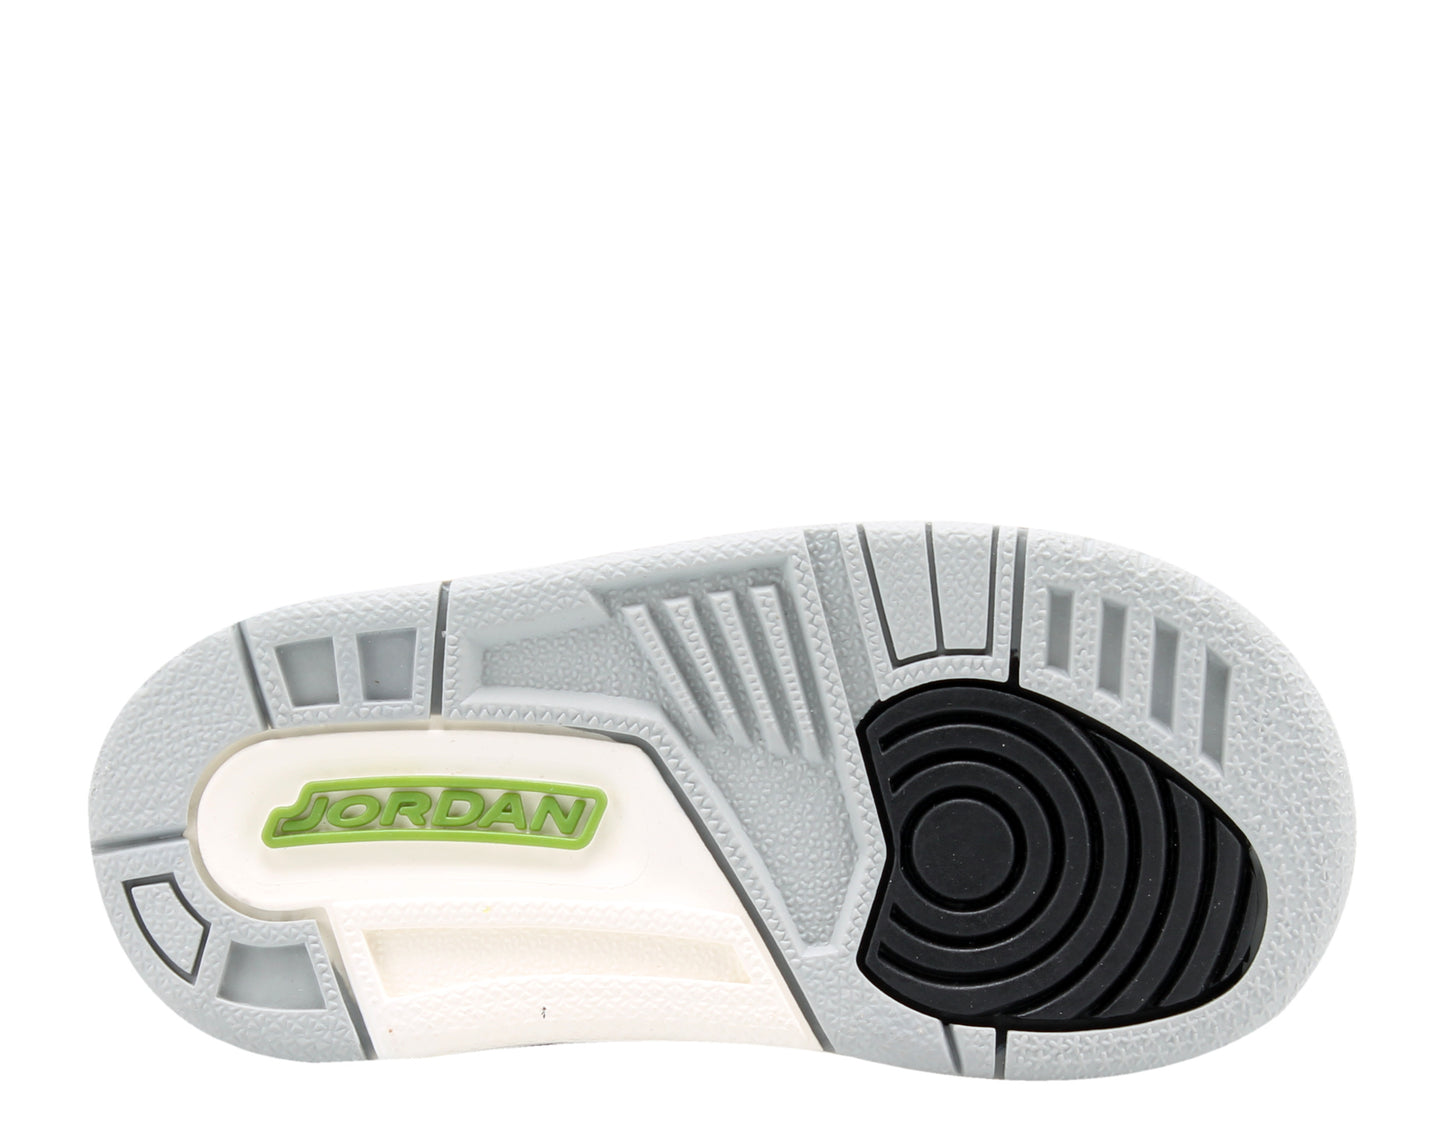 Nike Air Jordan 3 Retro (TD) Chlorophyll Toddler Boys Basketball Shoes 832033-006